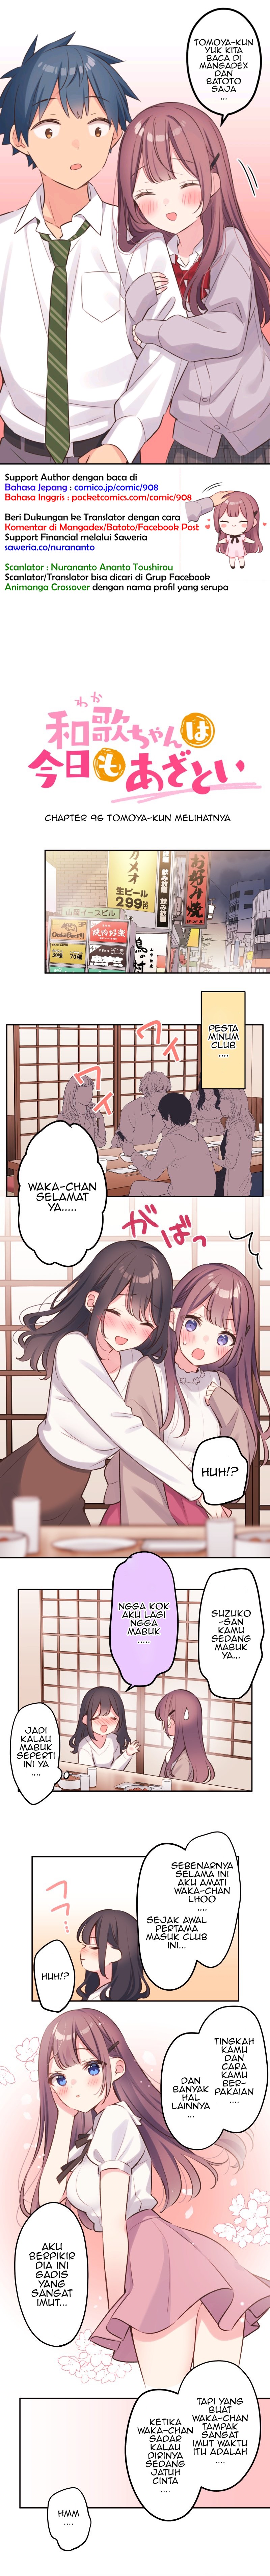 Waka-chan Is Flirty Again Chapter 96